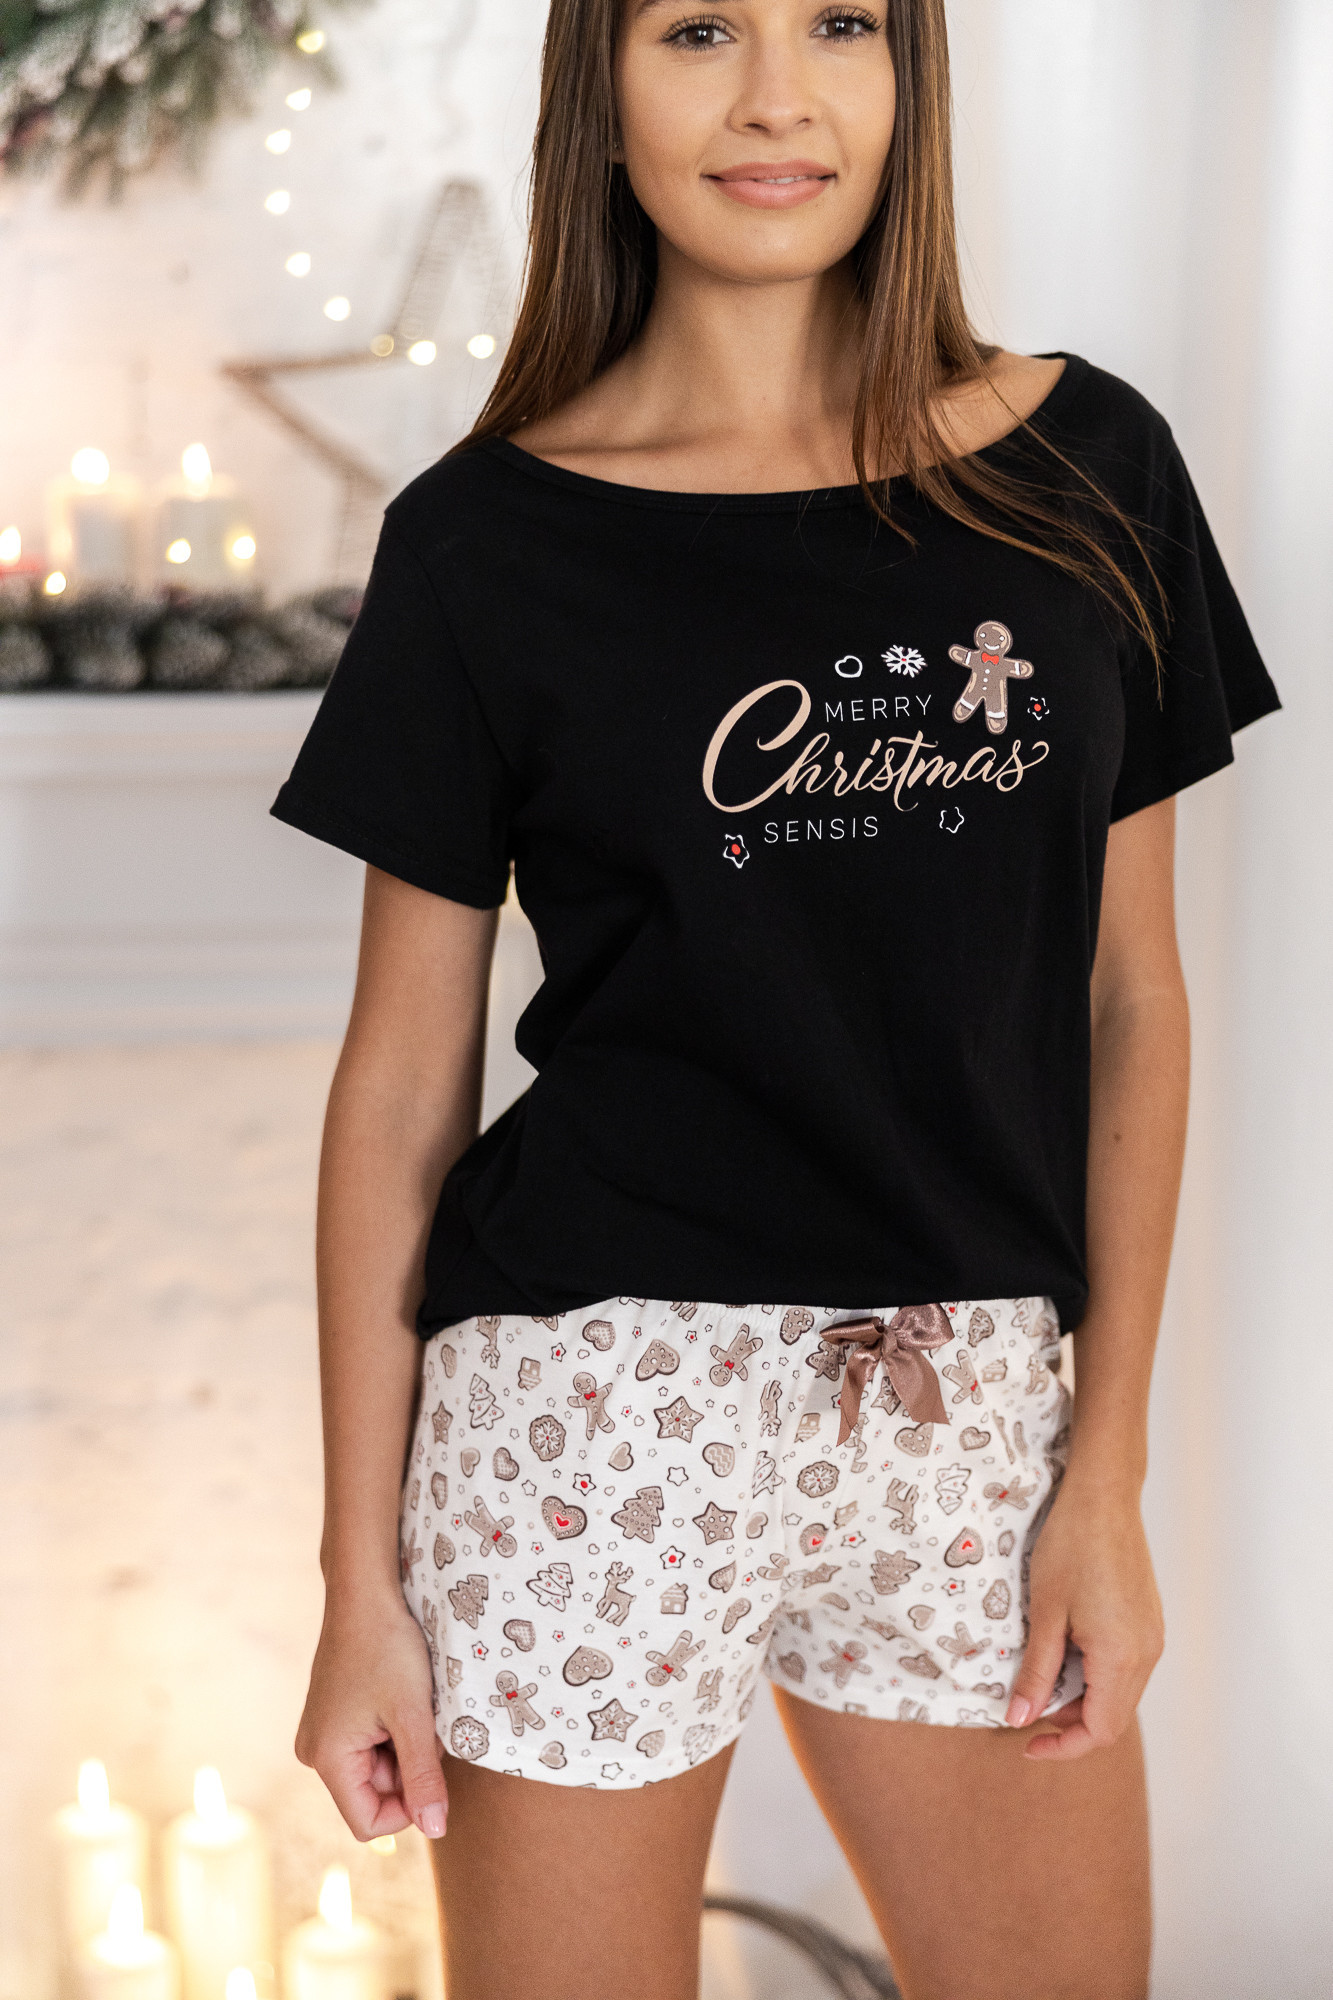 Sladké vánoční pyžamo - Sensis XL